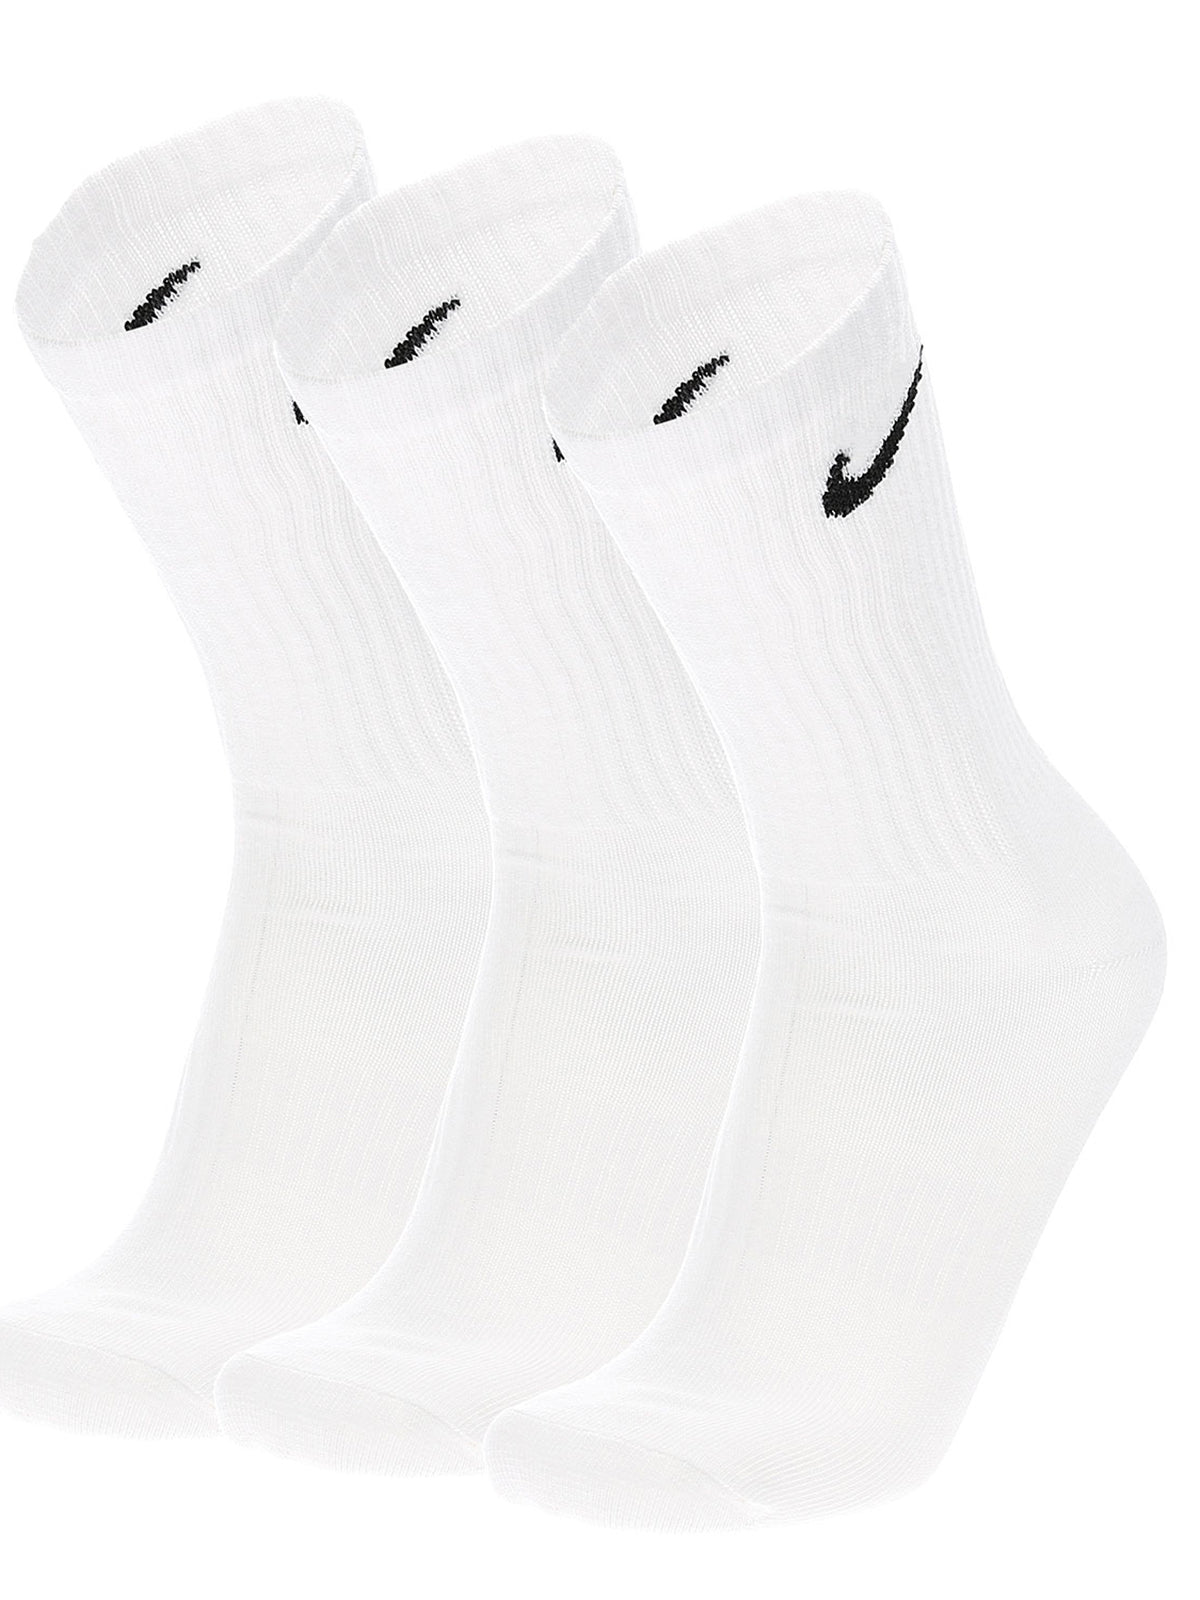 Calze Unisex Nike - Everyday Lightweight Crew Socks - 3 Pair - Bianco